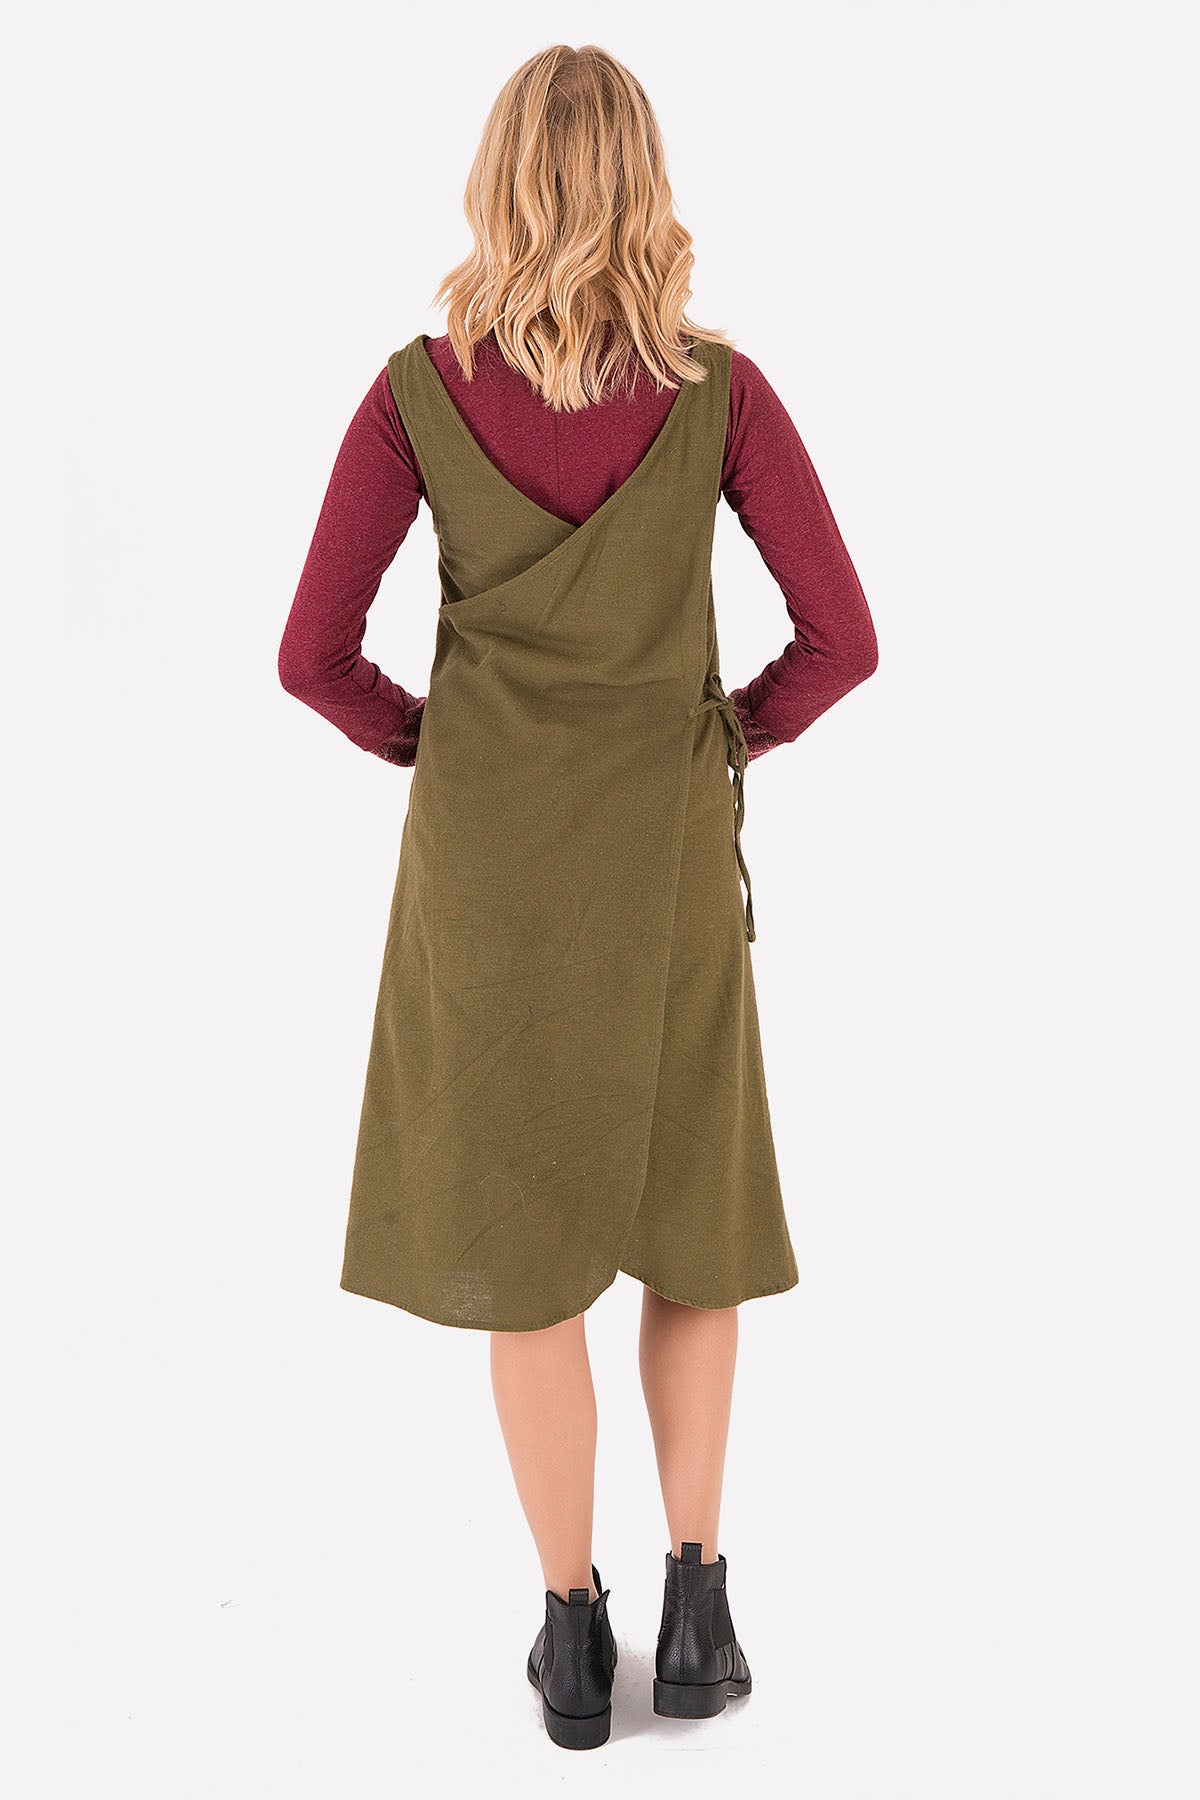 Khaki Sleeveless Authentic Midi Dress